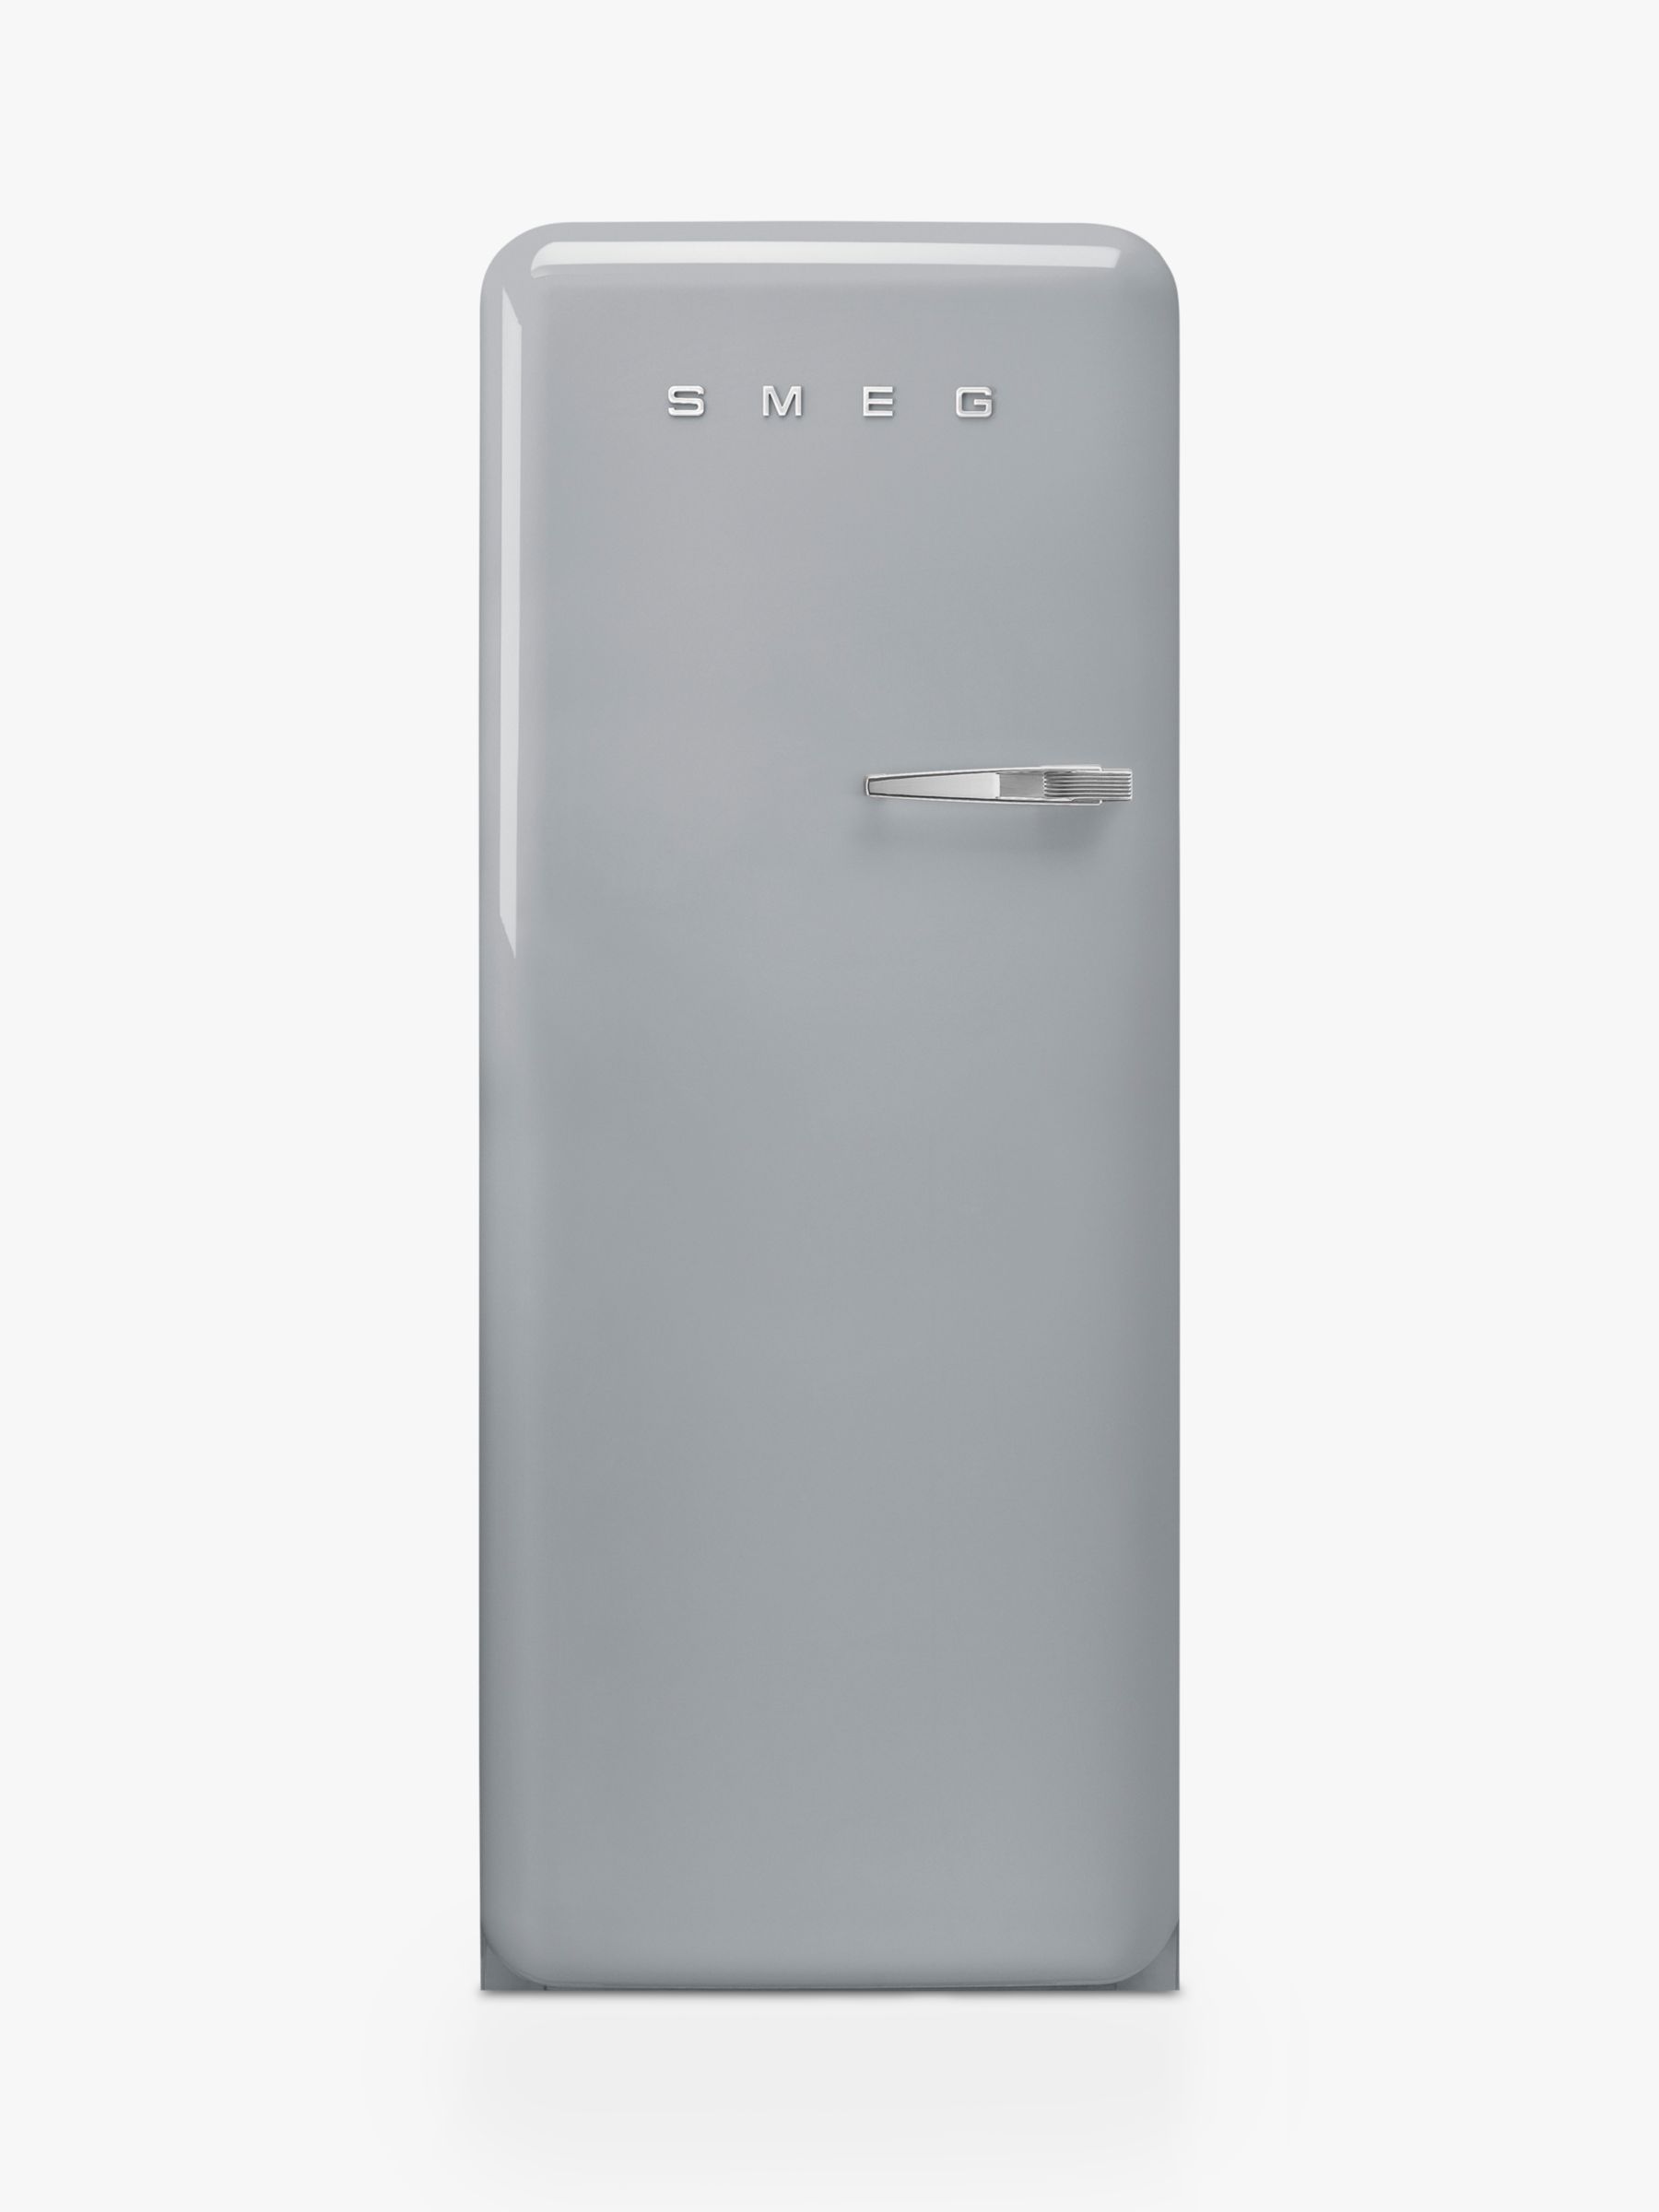 Smeg FAB28L Freestanding Fridge with Freezer Compartment, A+++ Energy Rating, 60cm Wide, Left-Hand Hinge